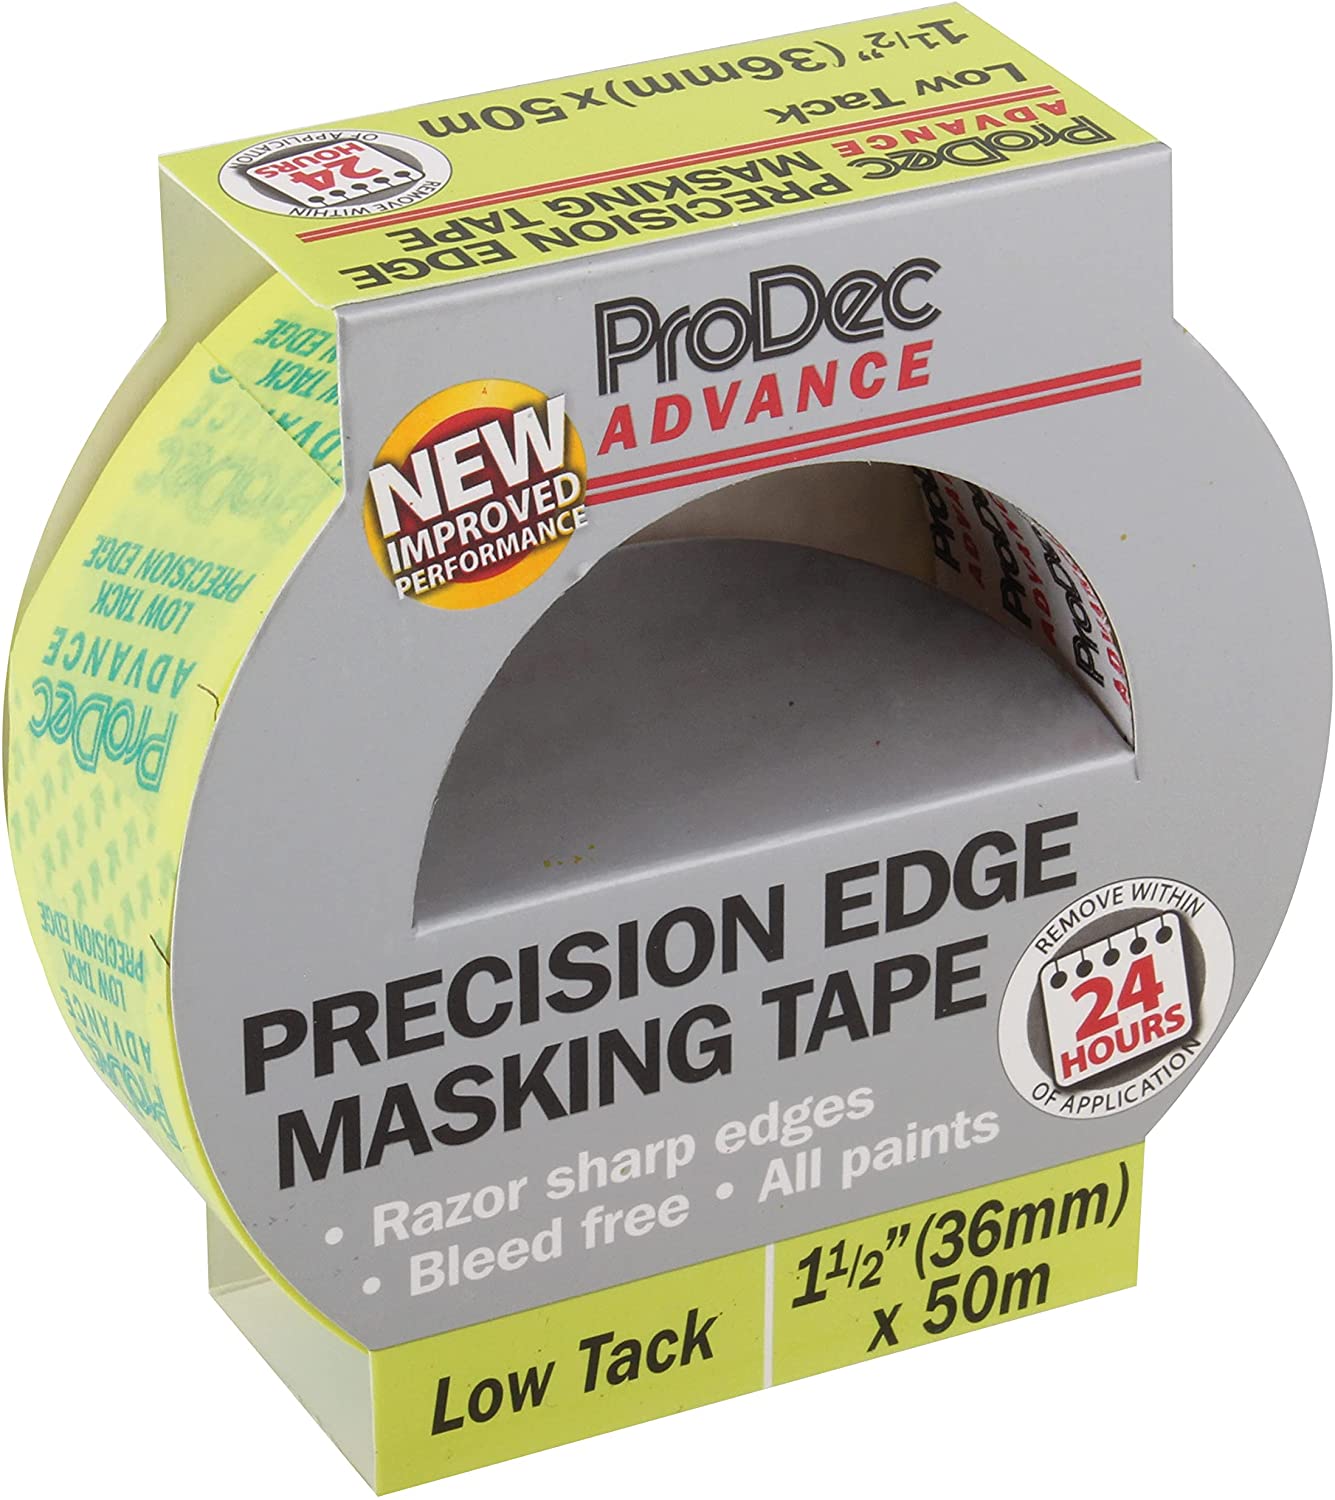 Prodec Advance Precision Edge Low Tack Masking Tape 36mm x 50m